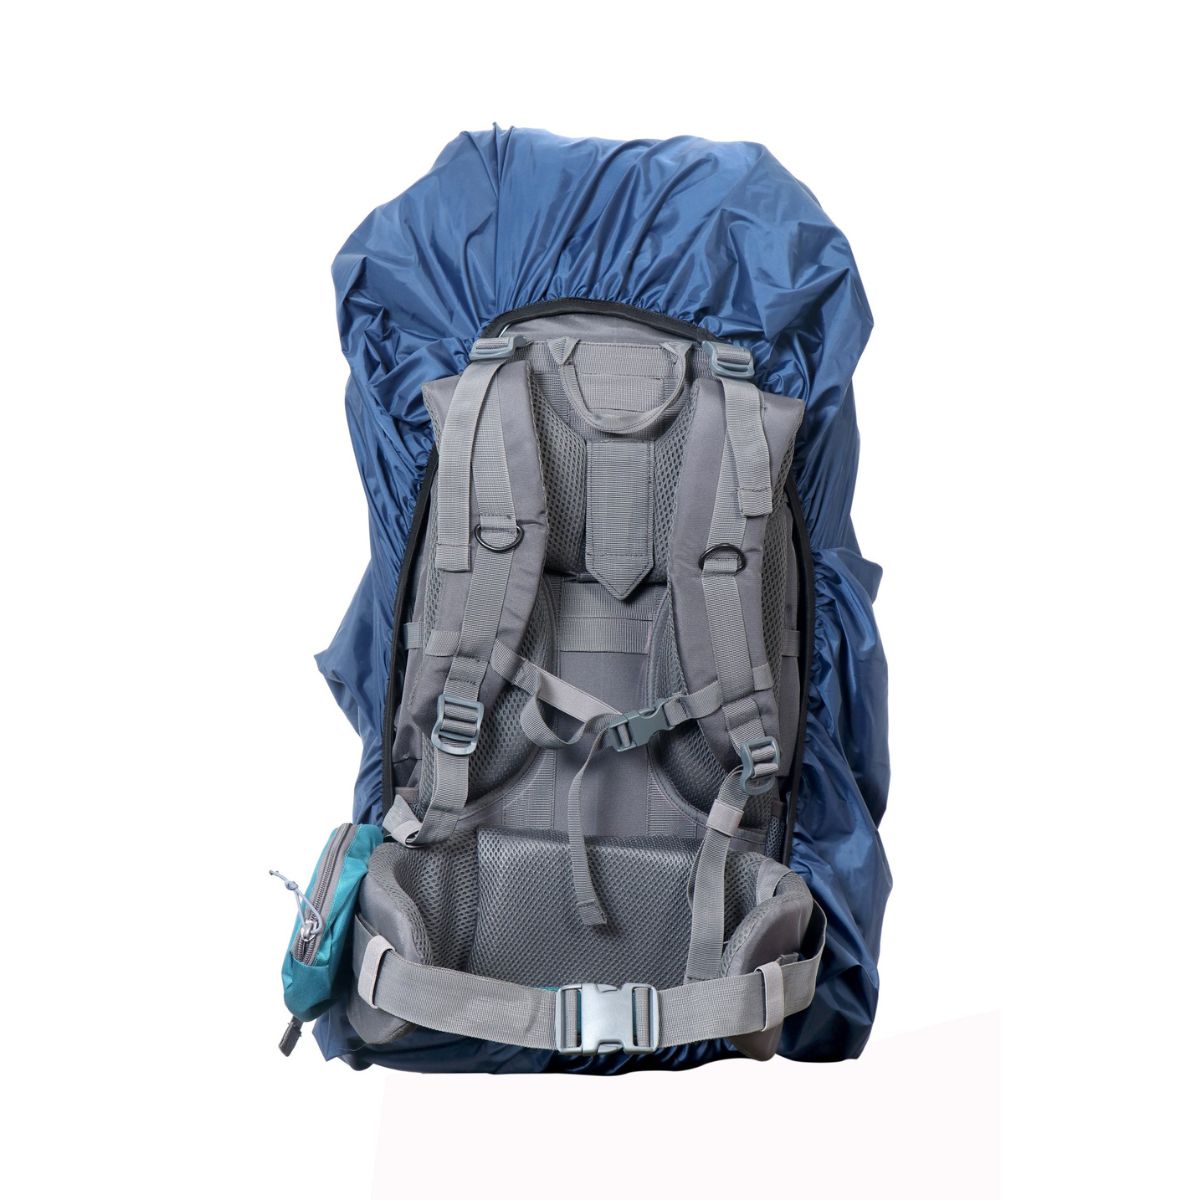 Waterproof Rain Cover for Backpack & Rucksack - Blue 2